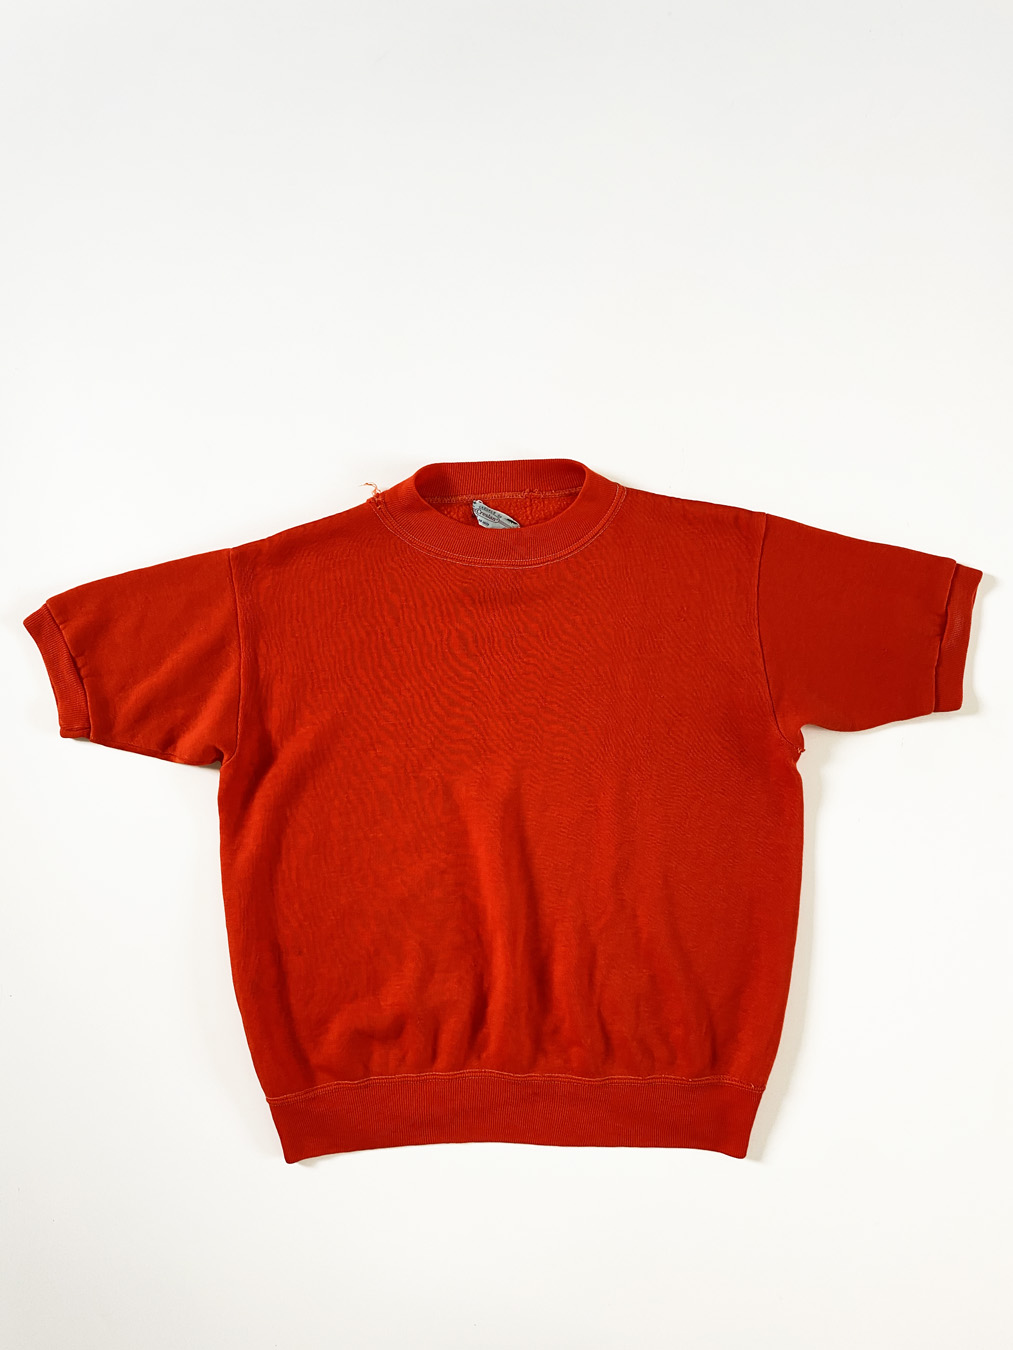 70s Casuals Of Creslan Burnt Orange Short Sleeve Sweater - 5 Star Vintage